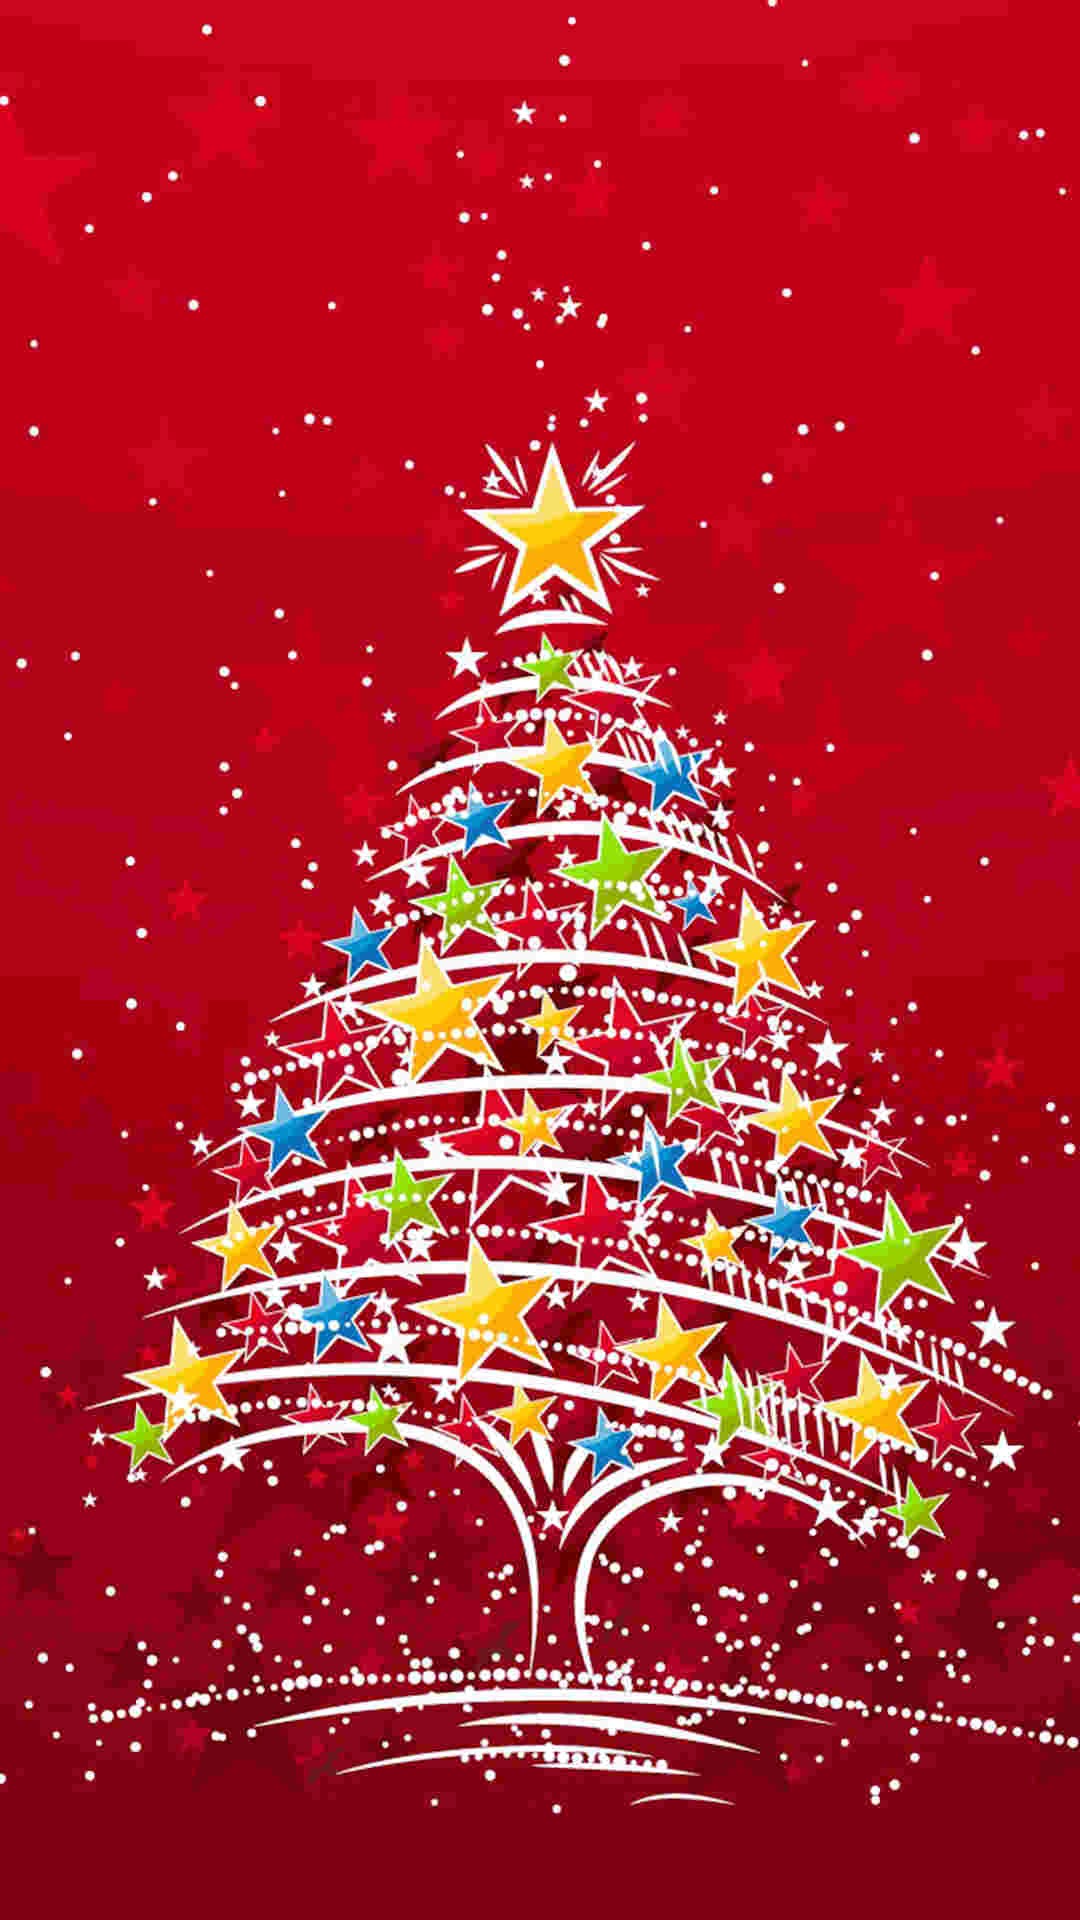 Immagini Natale Iphone 6.Christmas Iphone Wallpaper Pixelstalk Net